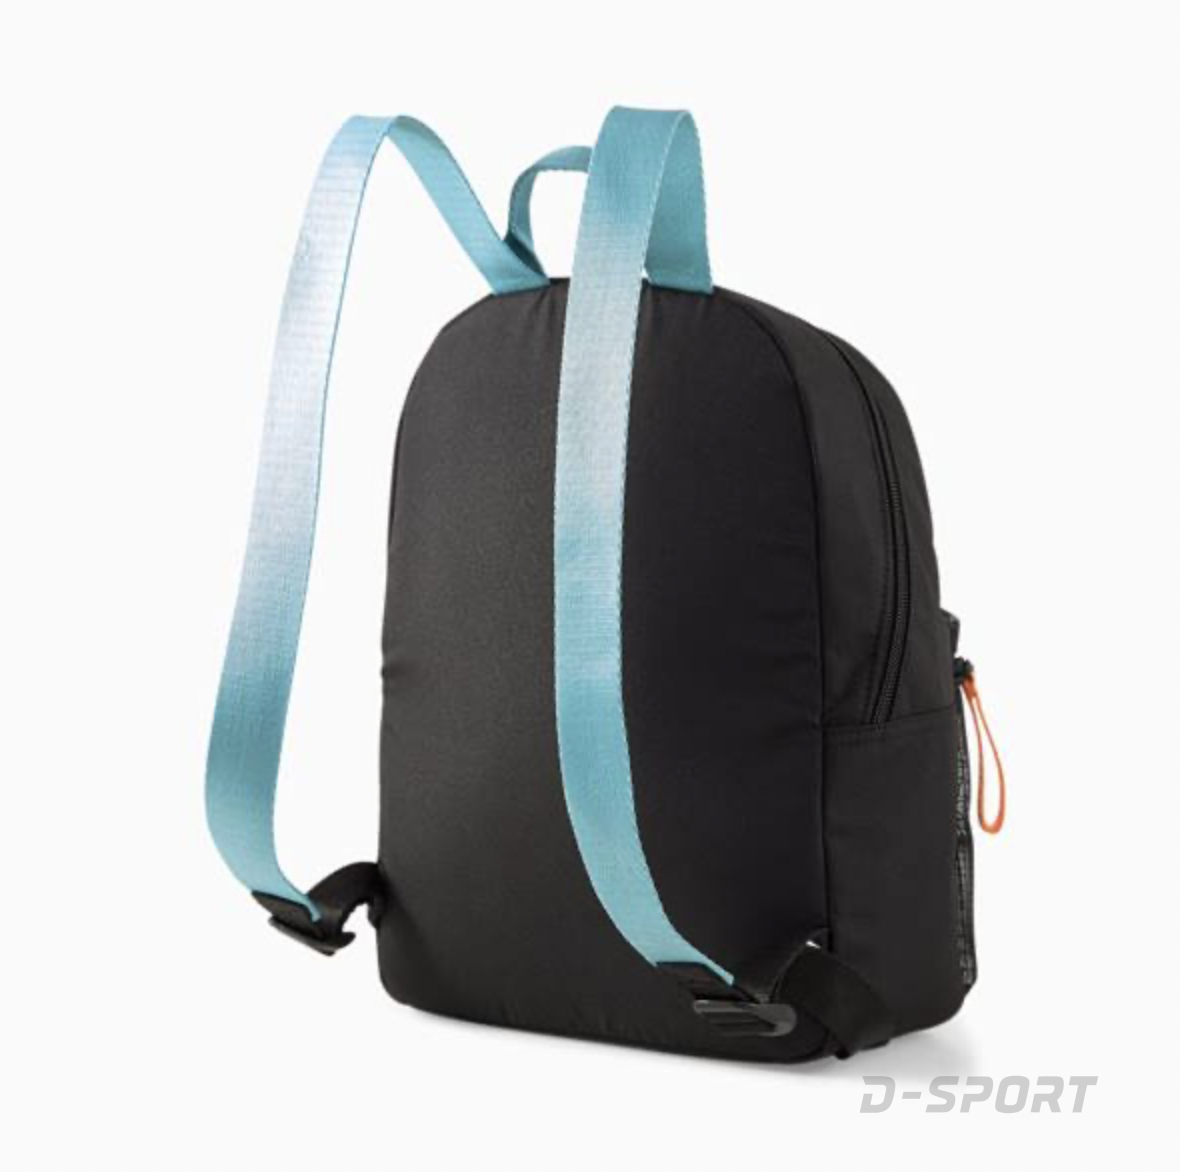 Prime Street Backpack